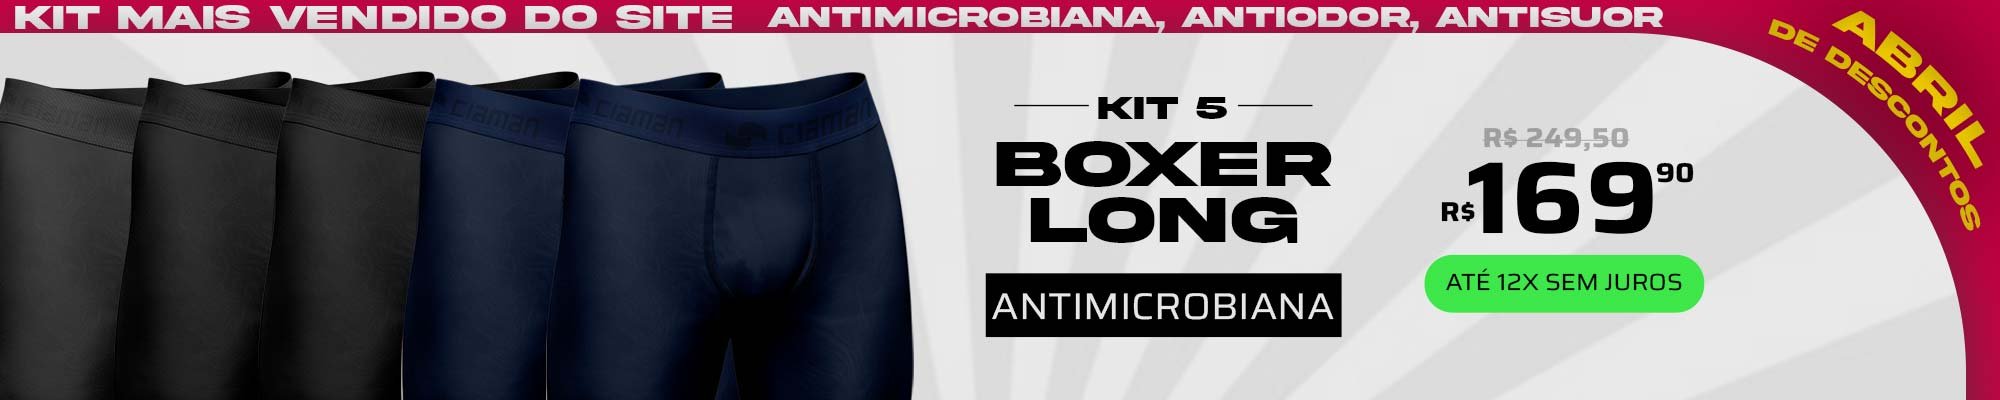 banner-kit-6-boxer-long-antimicrobianas-desktop